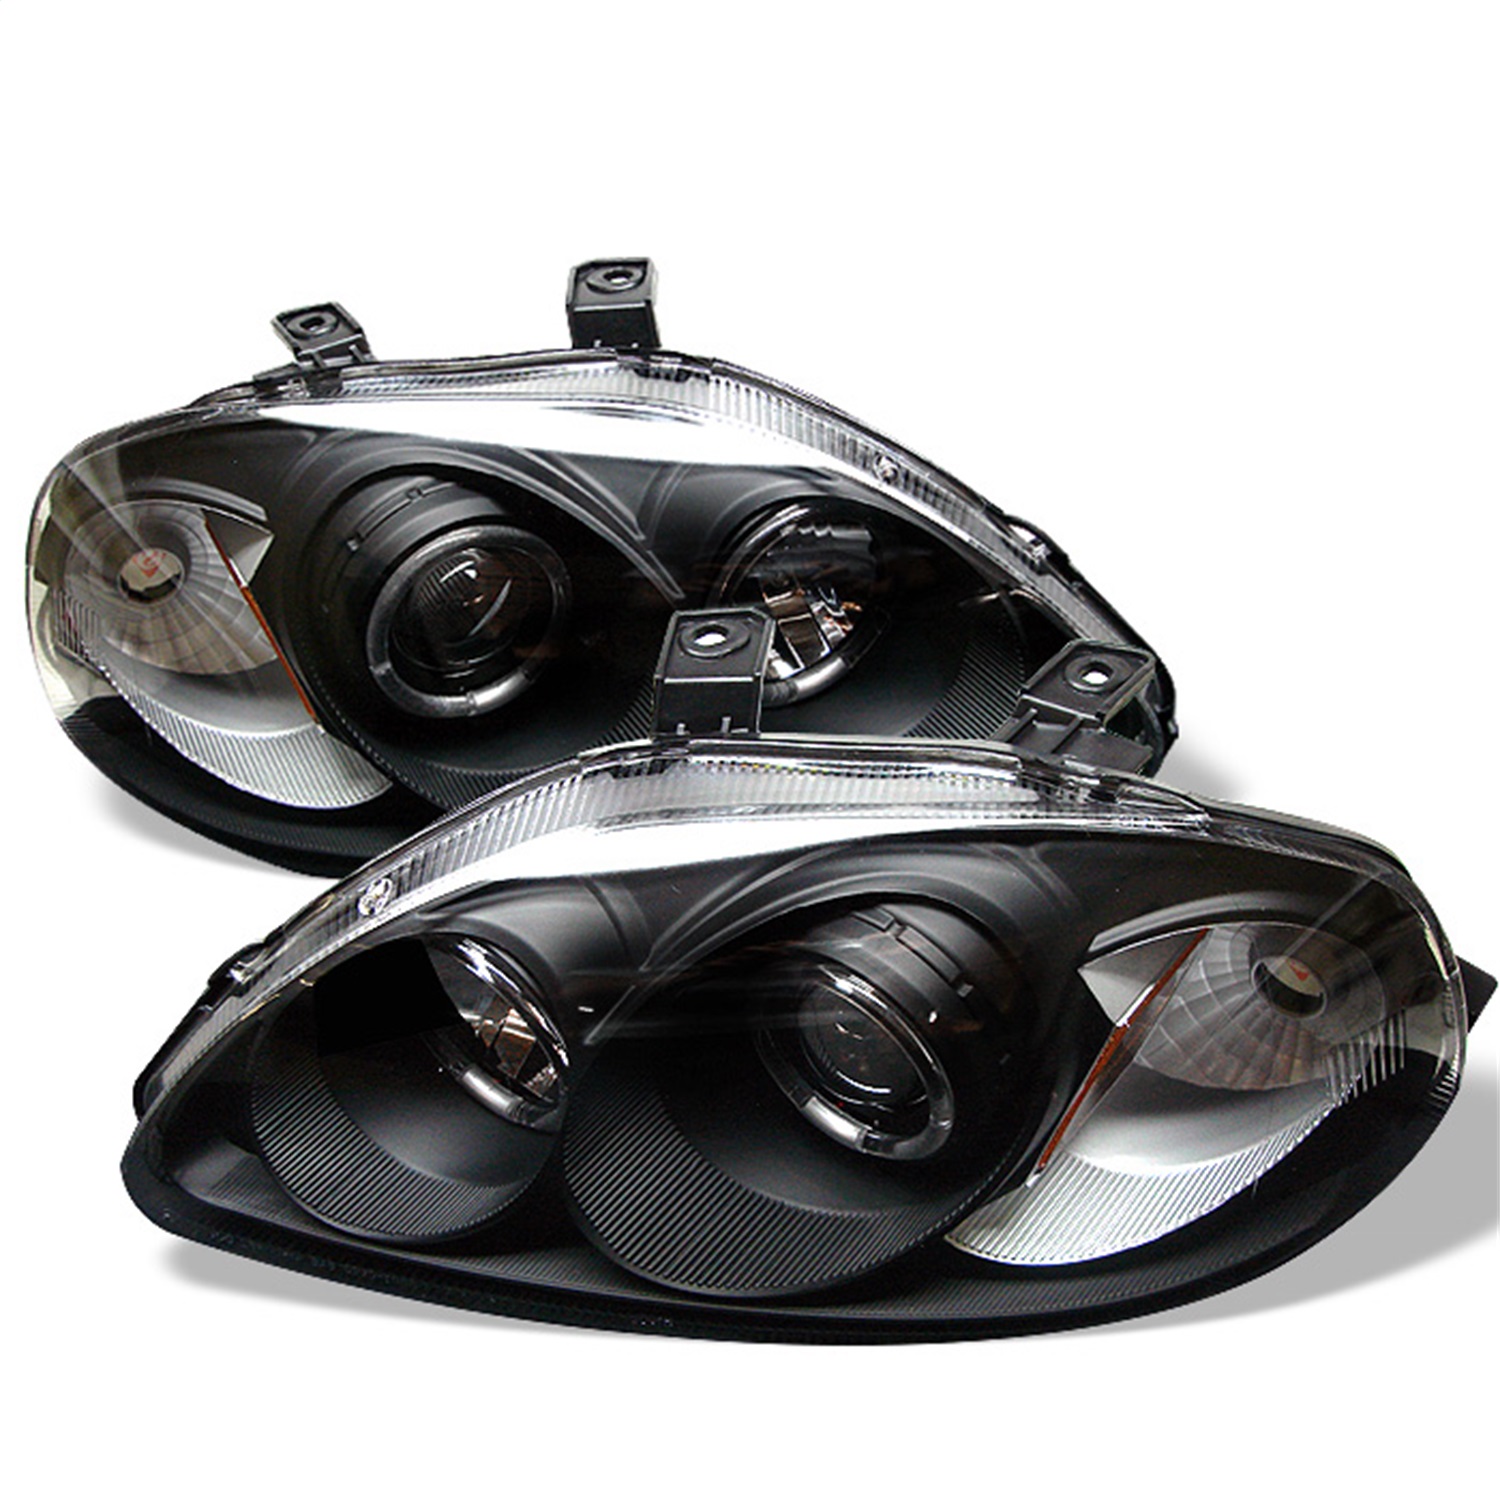 Spyder Auto 5010902 Halo Projector Headlights Fits 96-98 Civic